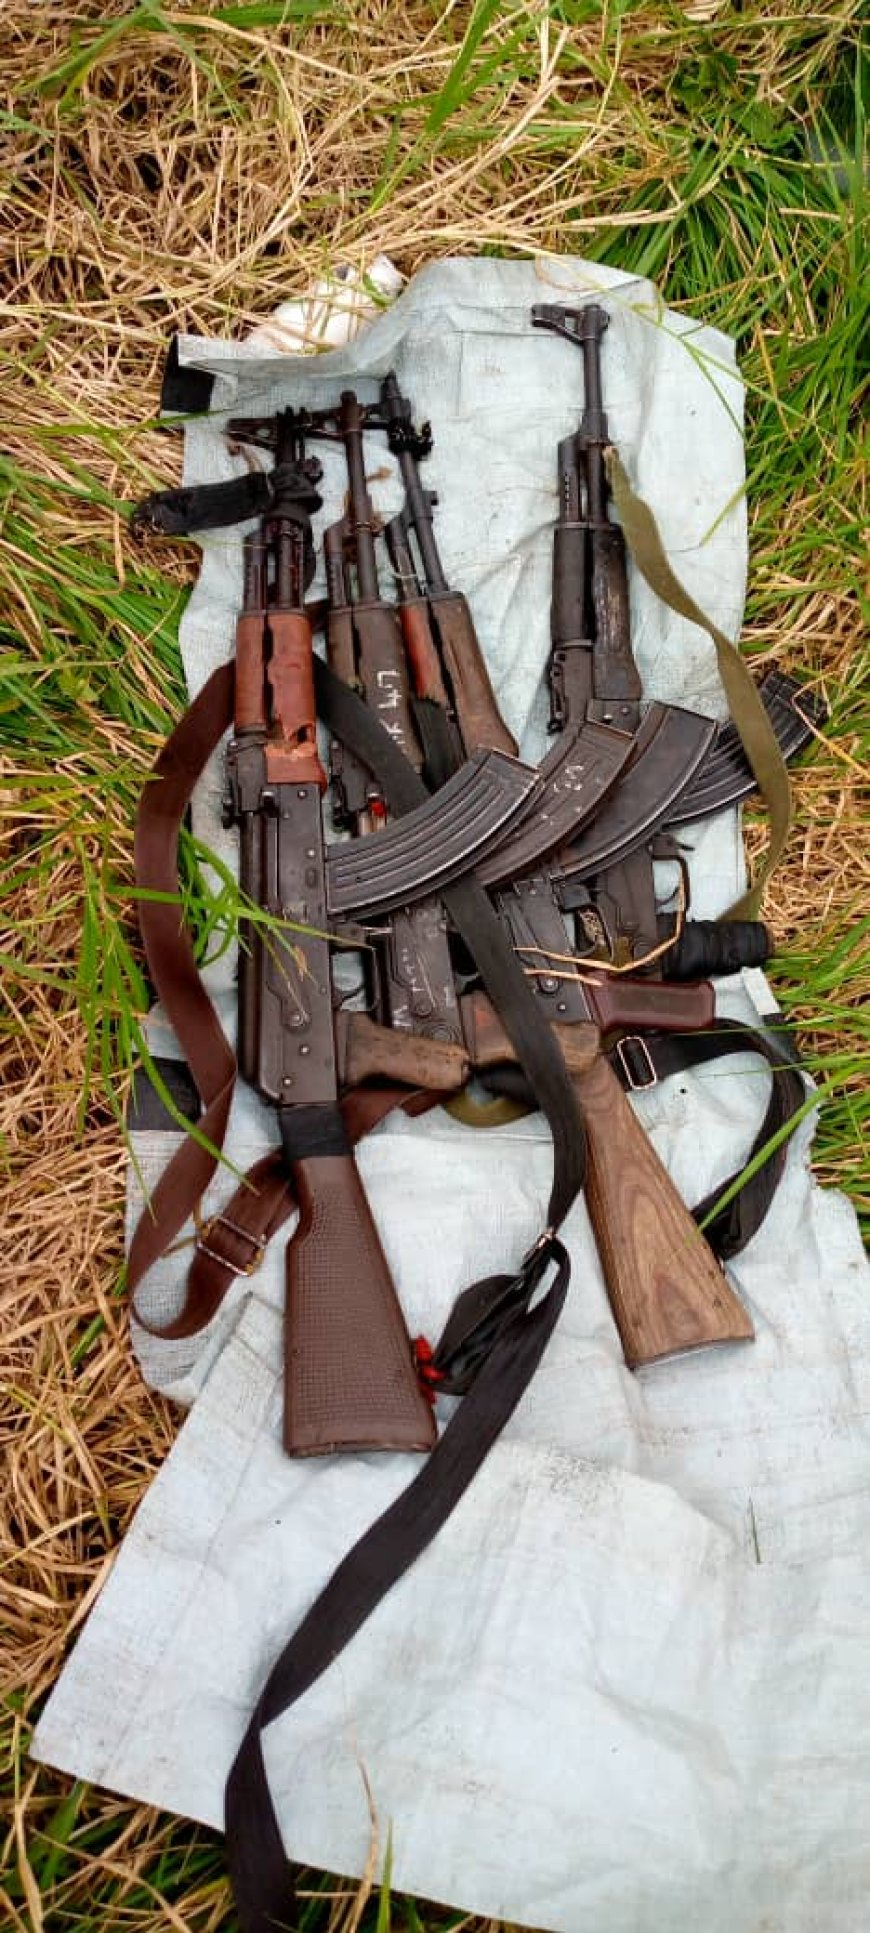 UPDF kill 5 ADF rebels, recovers 4 Guns in Ituri Province-DRC.